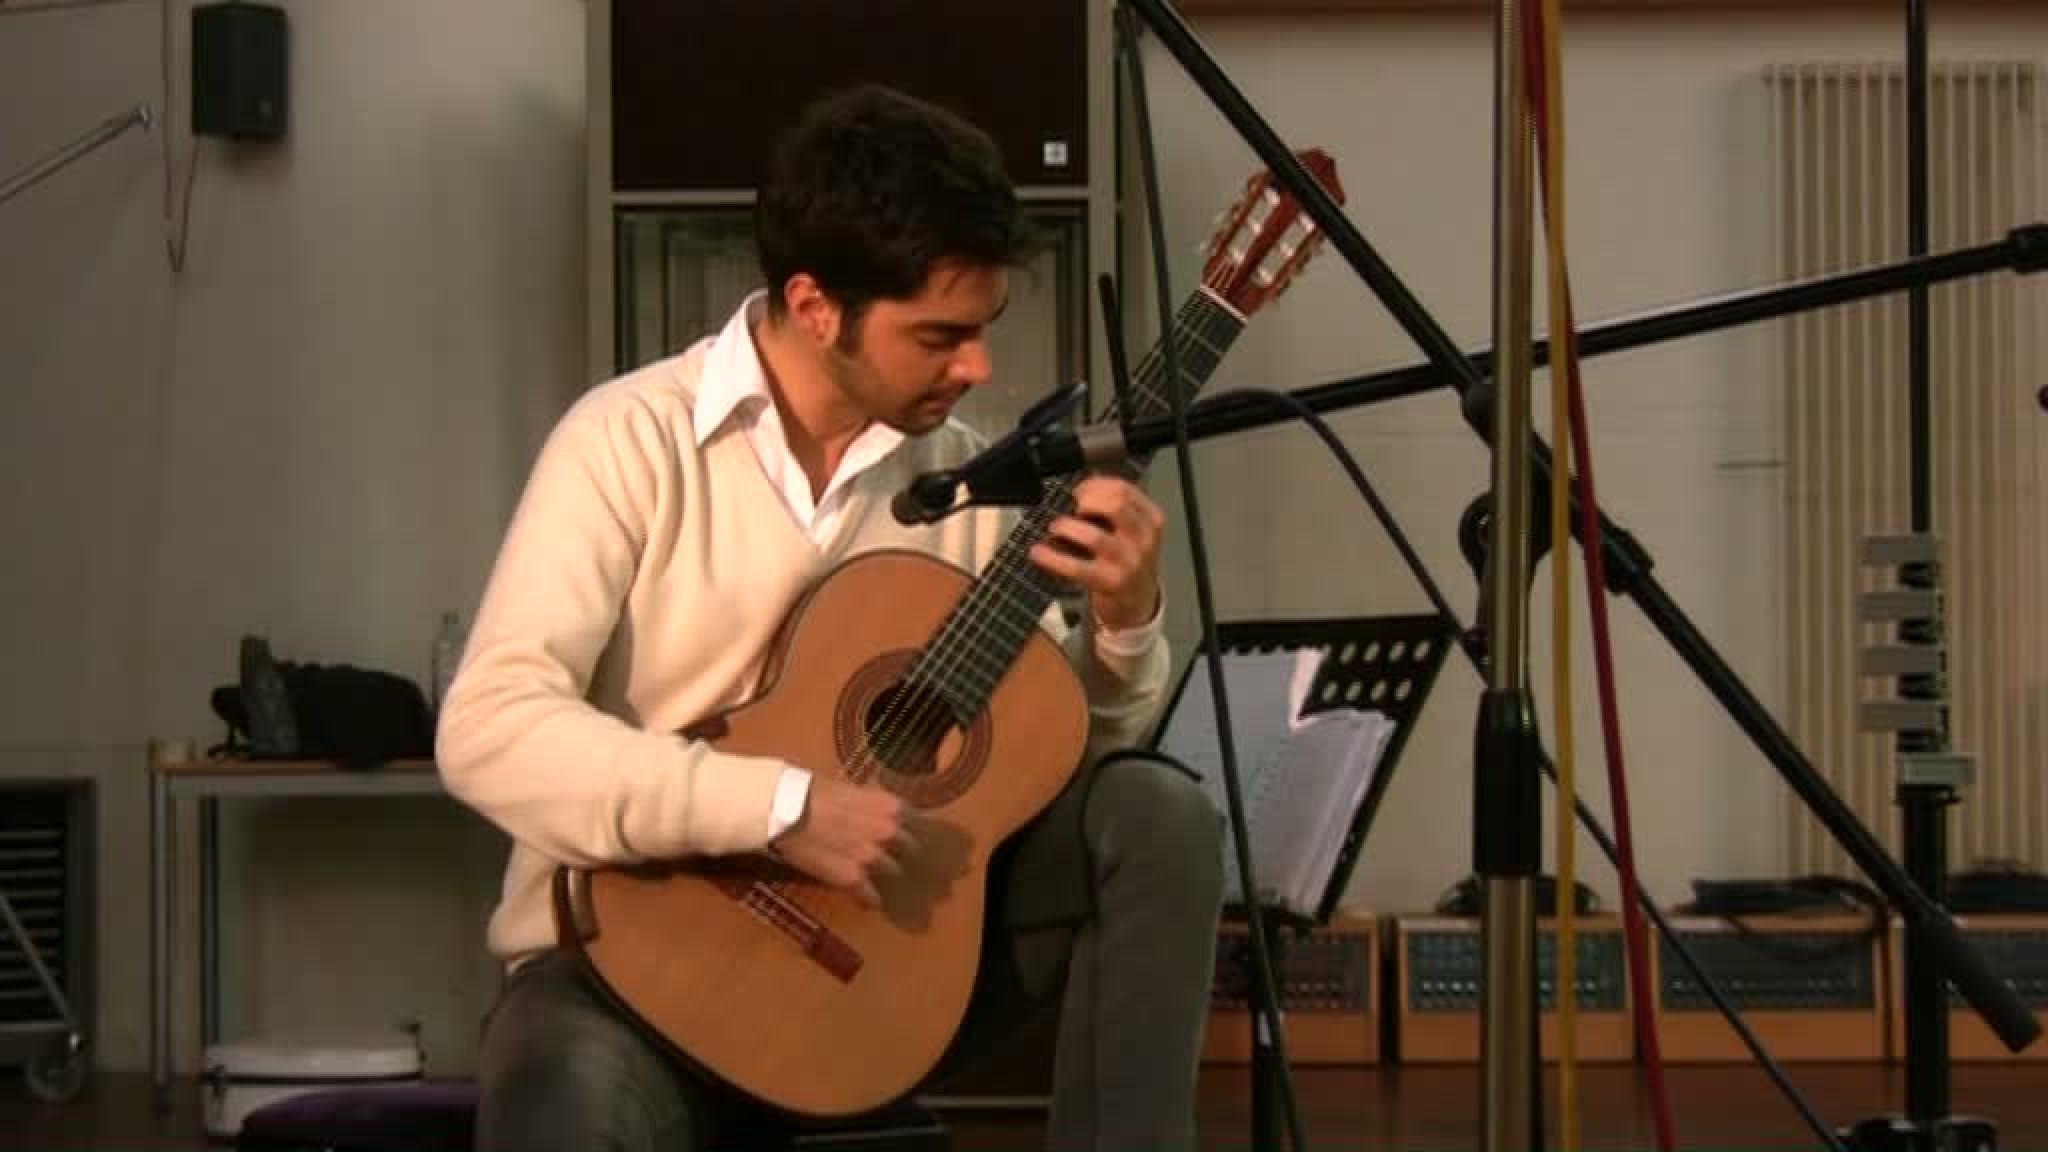 Ausschnitt aus Isaac Albéniz' Suite espanola op. 47, No. 5 - Asturias (Leyenda)